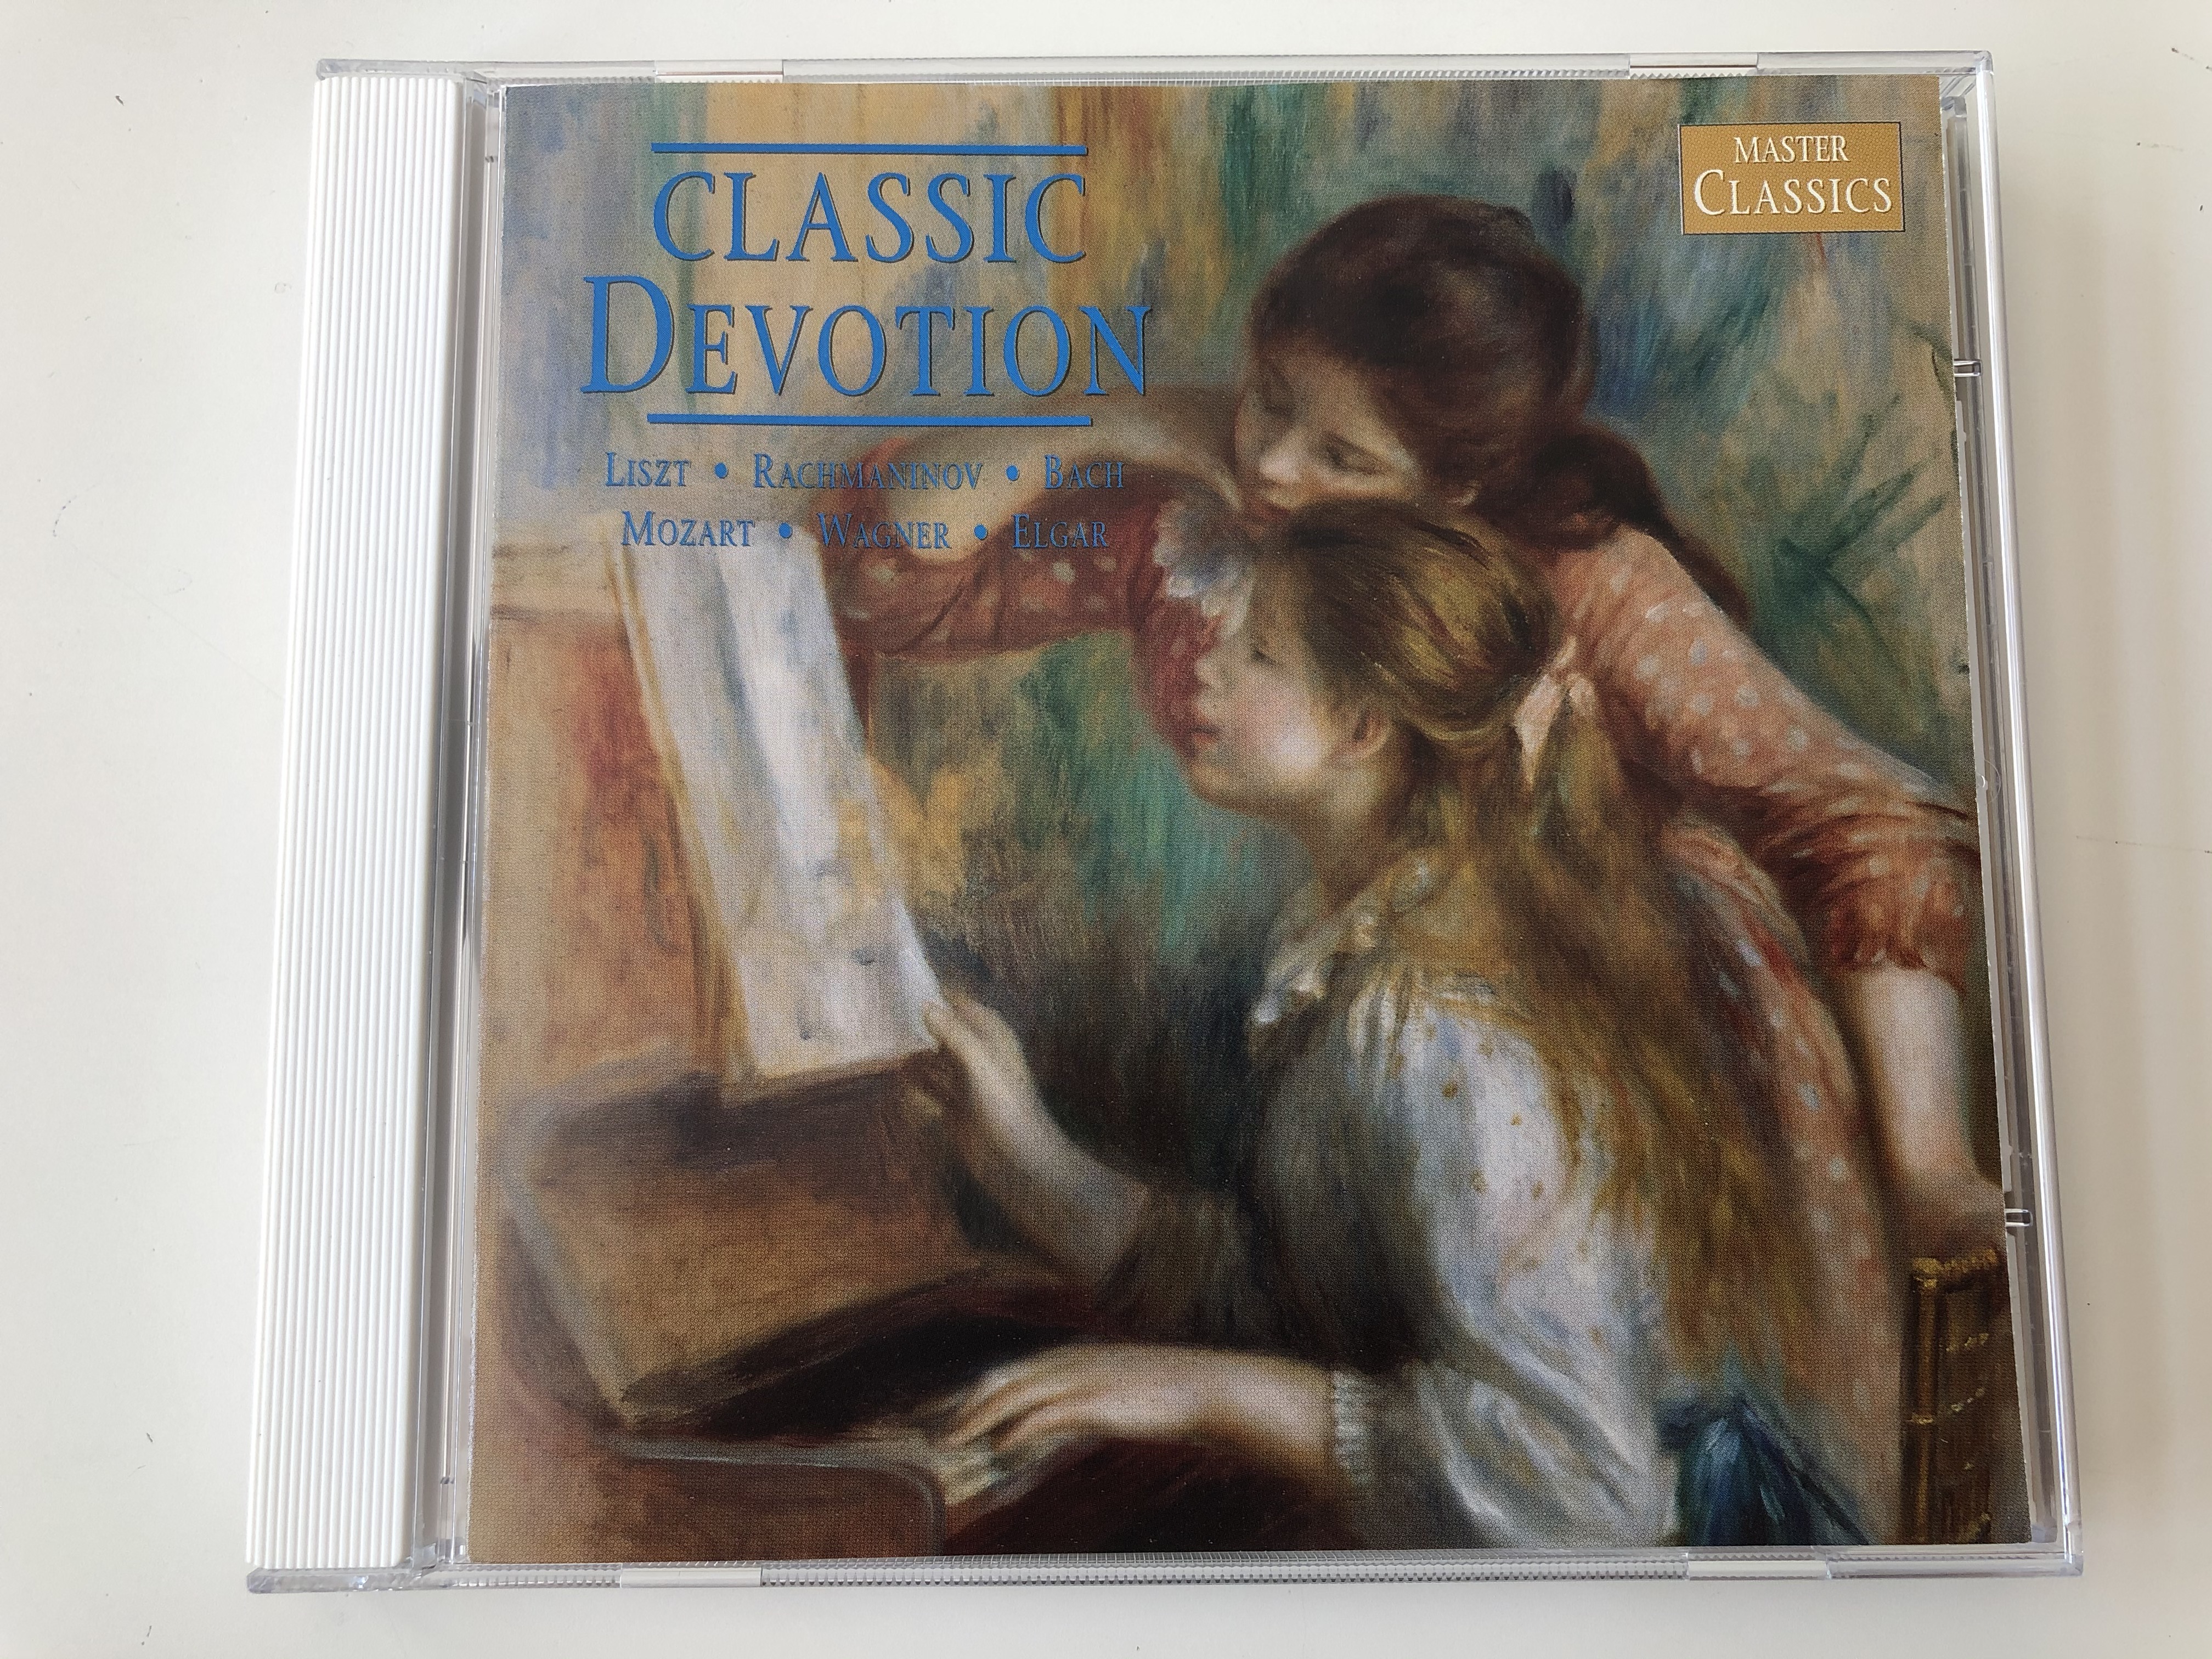 classic-devotion-liszt-rachmaninov-bach-mozart-wagner-elgar-master-classics-newsound-2000-audio-cd-1998-pycd-365-1-.jpg